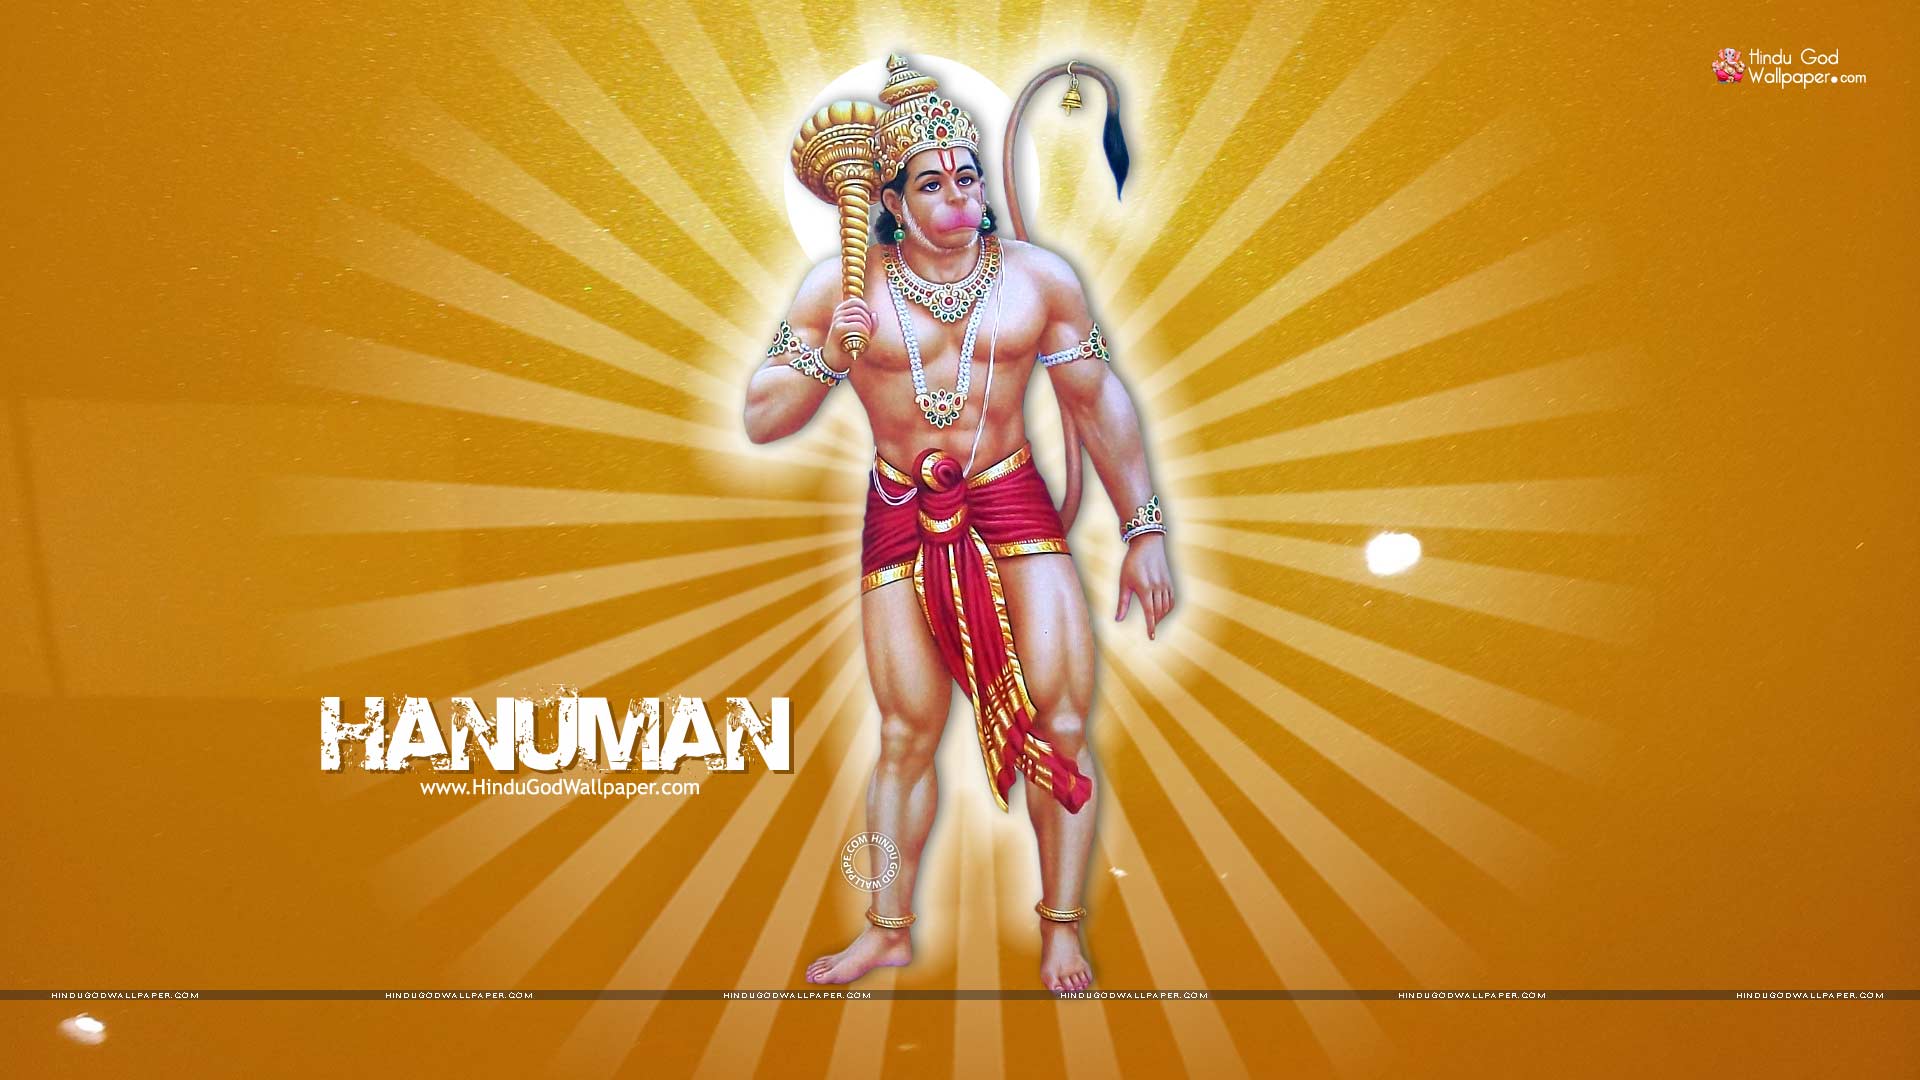 1080p Hanuman Bodybuilding HD Wallpaper Full Size Download